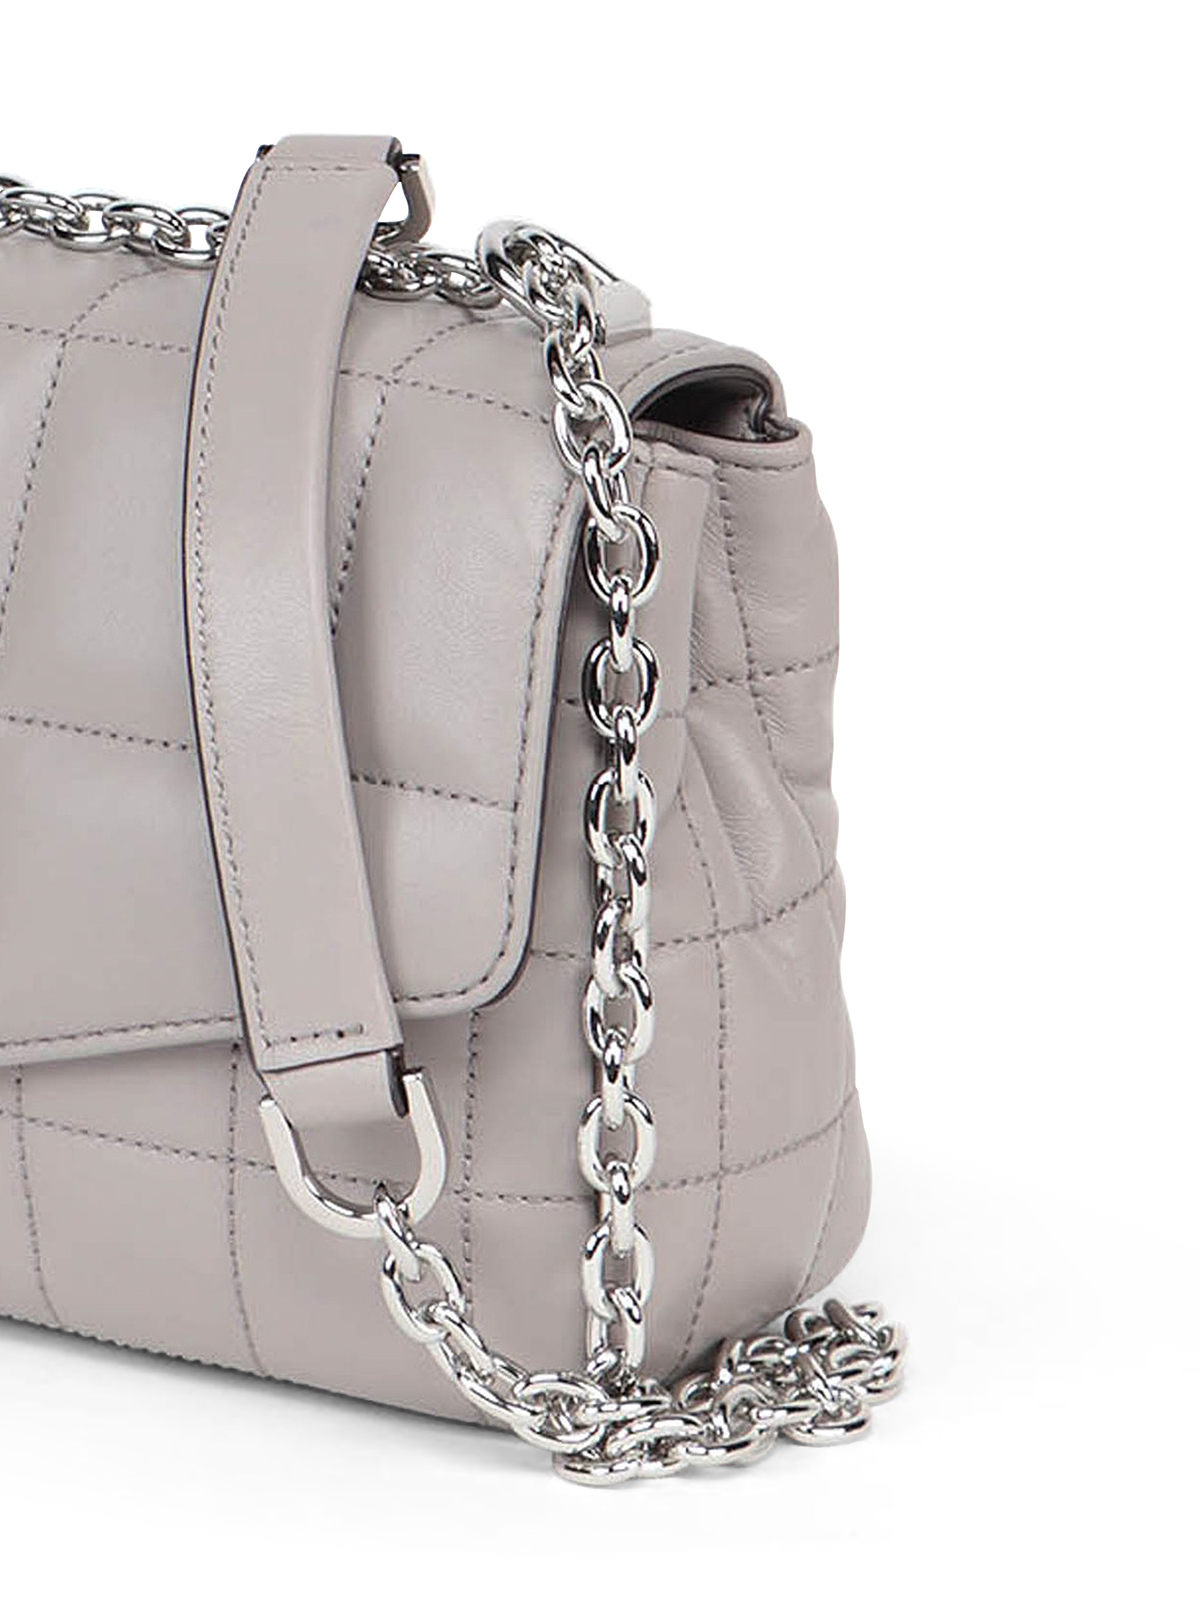 Michael Kors Ladies SoHo Large Quilted Leather Shoulder Bag